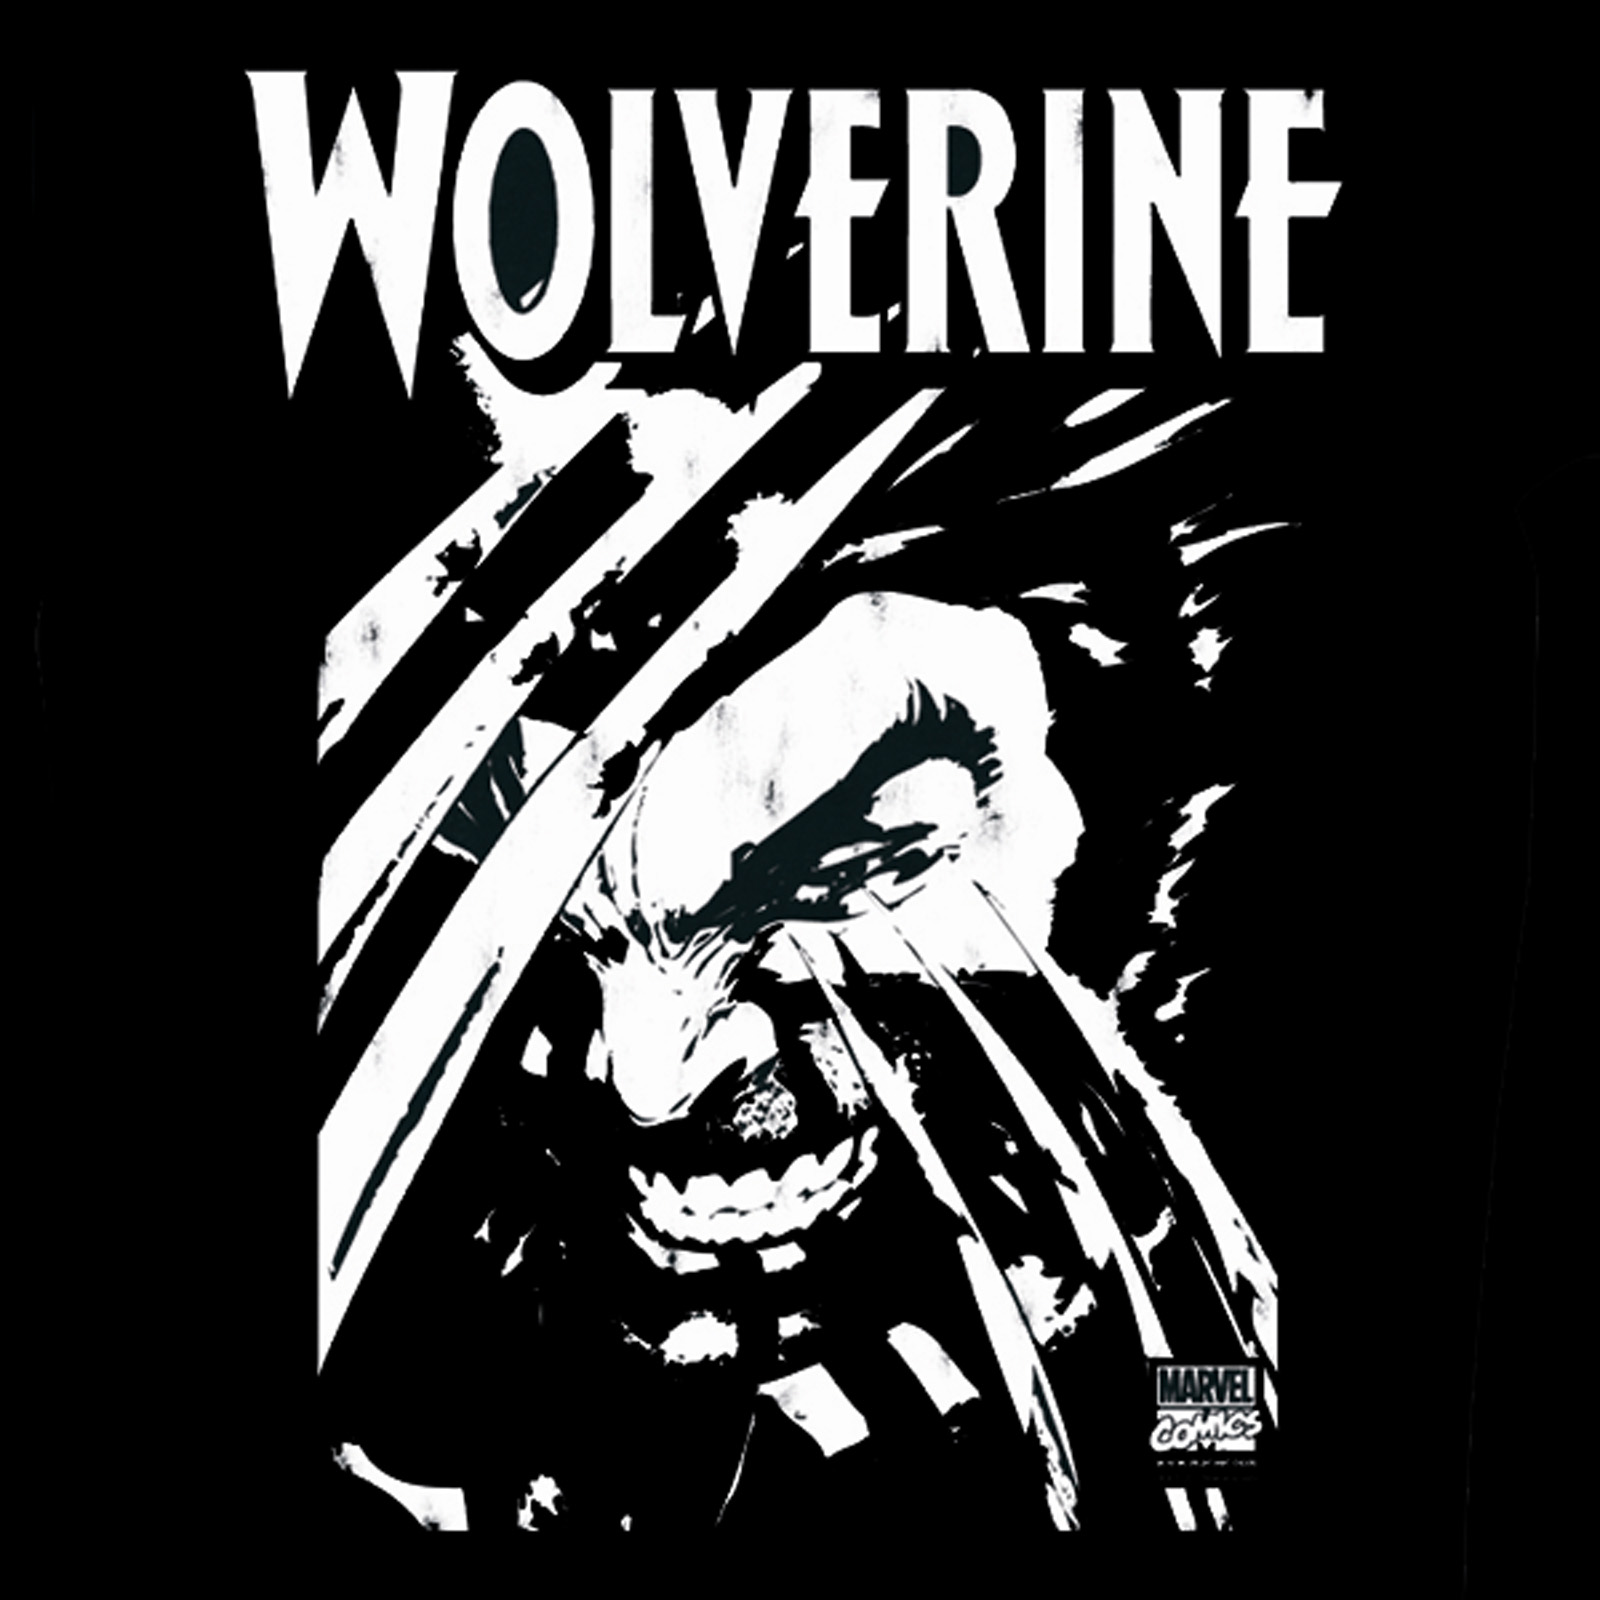 Wolverine Marvel T-Shirt